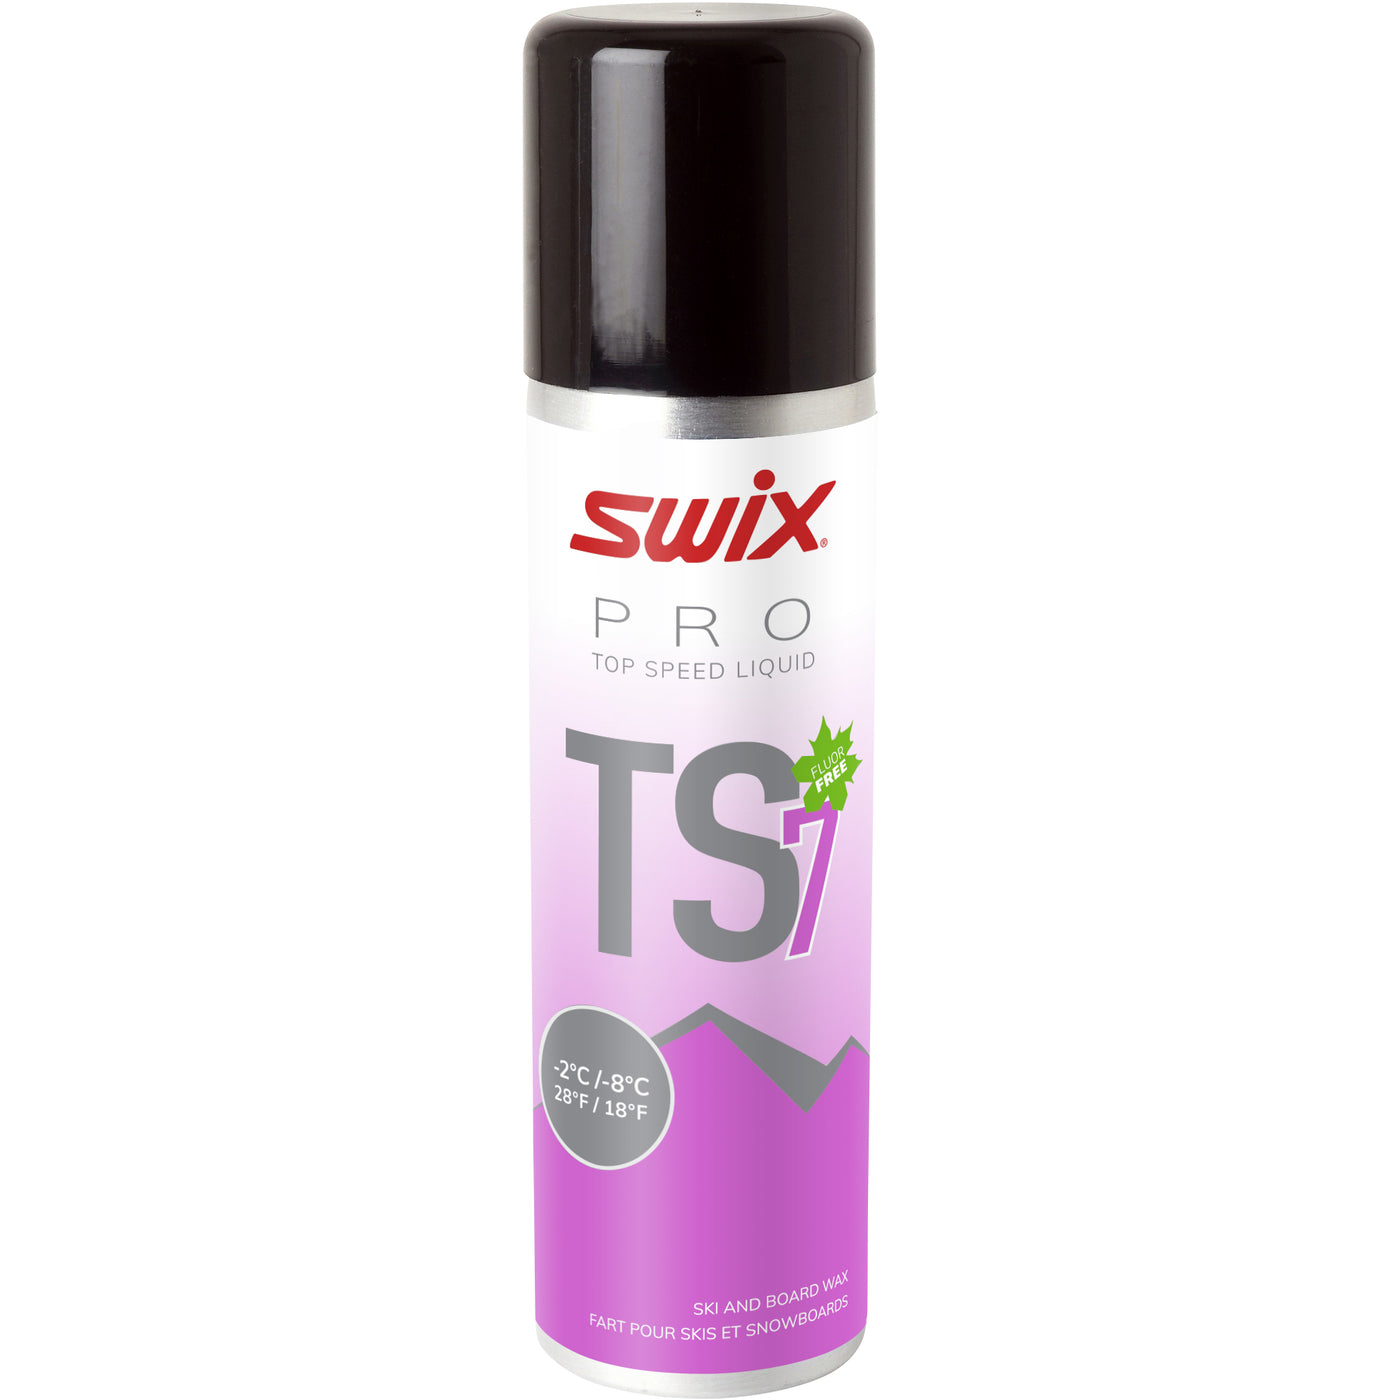 Swix TS7 Violet Liquid, 50ml - Top Speed - UPS Ground Only SKI & SNOWBOARD WAX Swix   